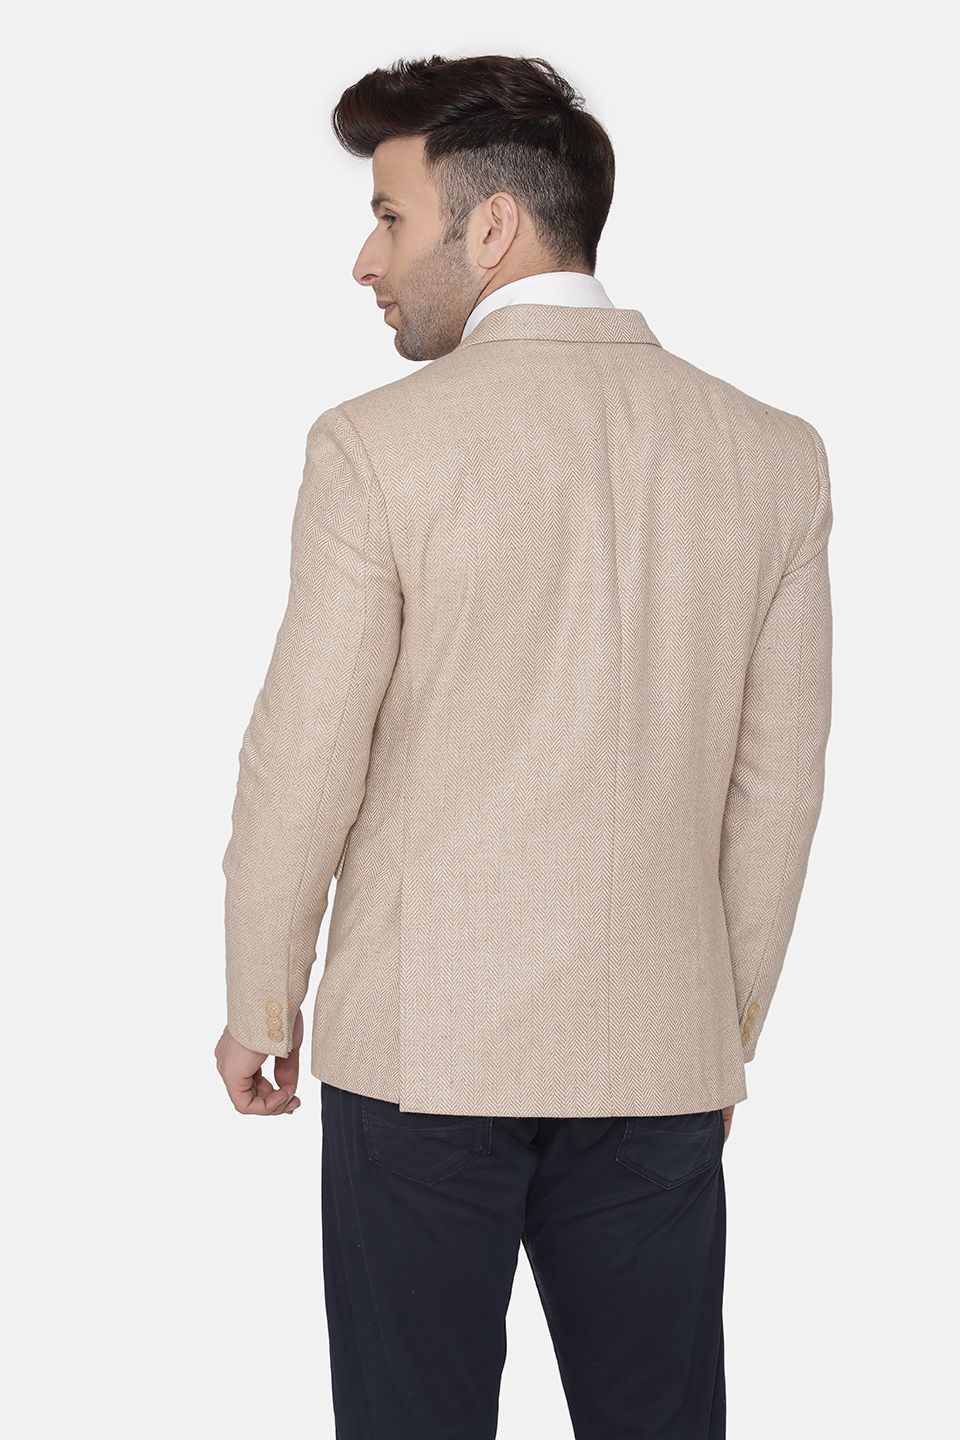 Wintage Men's Tweed Casual and Festive Blazer Coat Jacket : Beige2